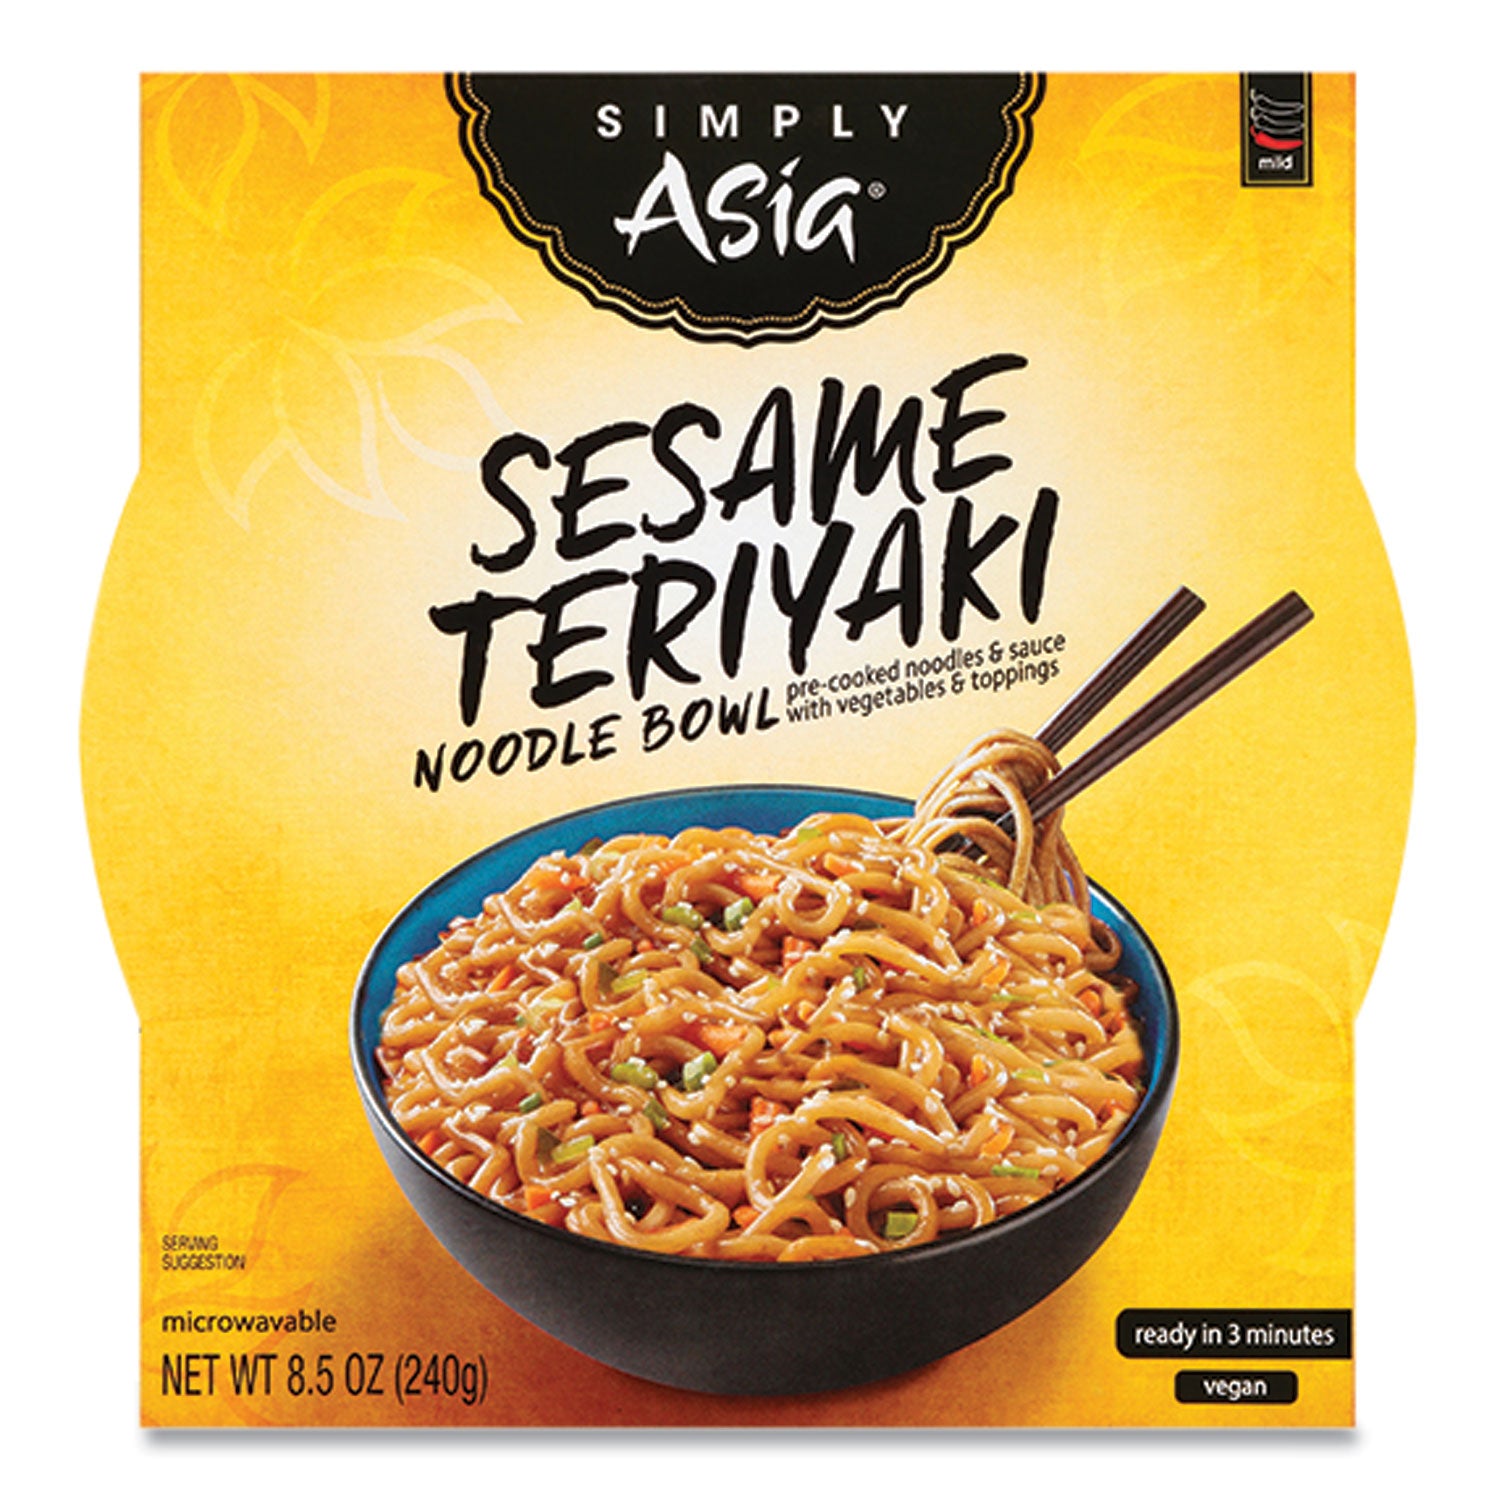 simply-asia-sesame-teriyaki-noodle-bowl-85-oz-6-carton_mkctha00086 - 1